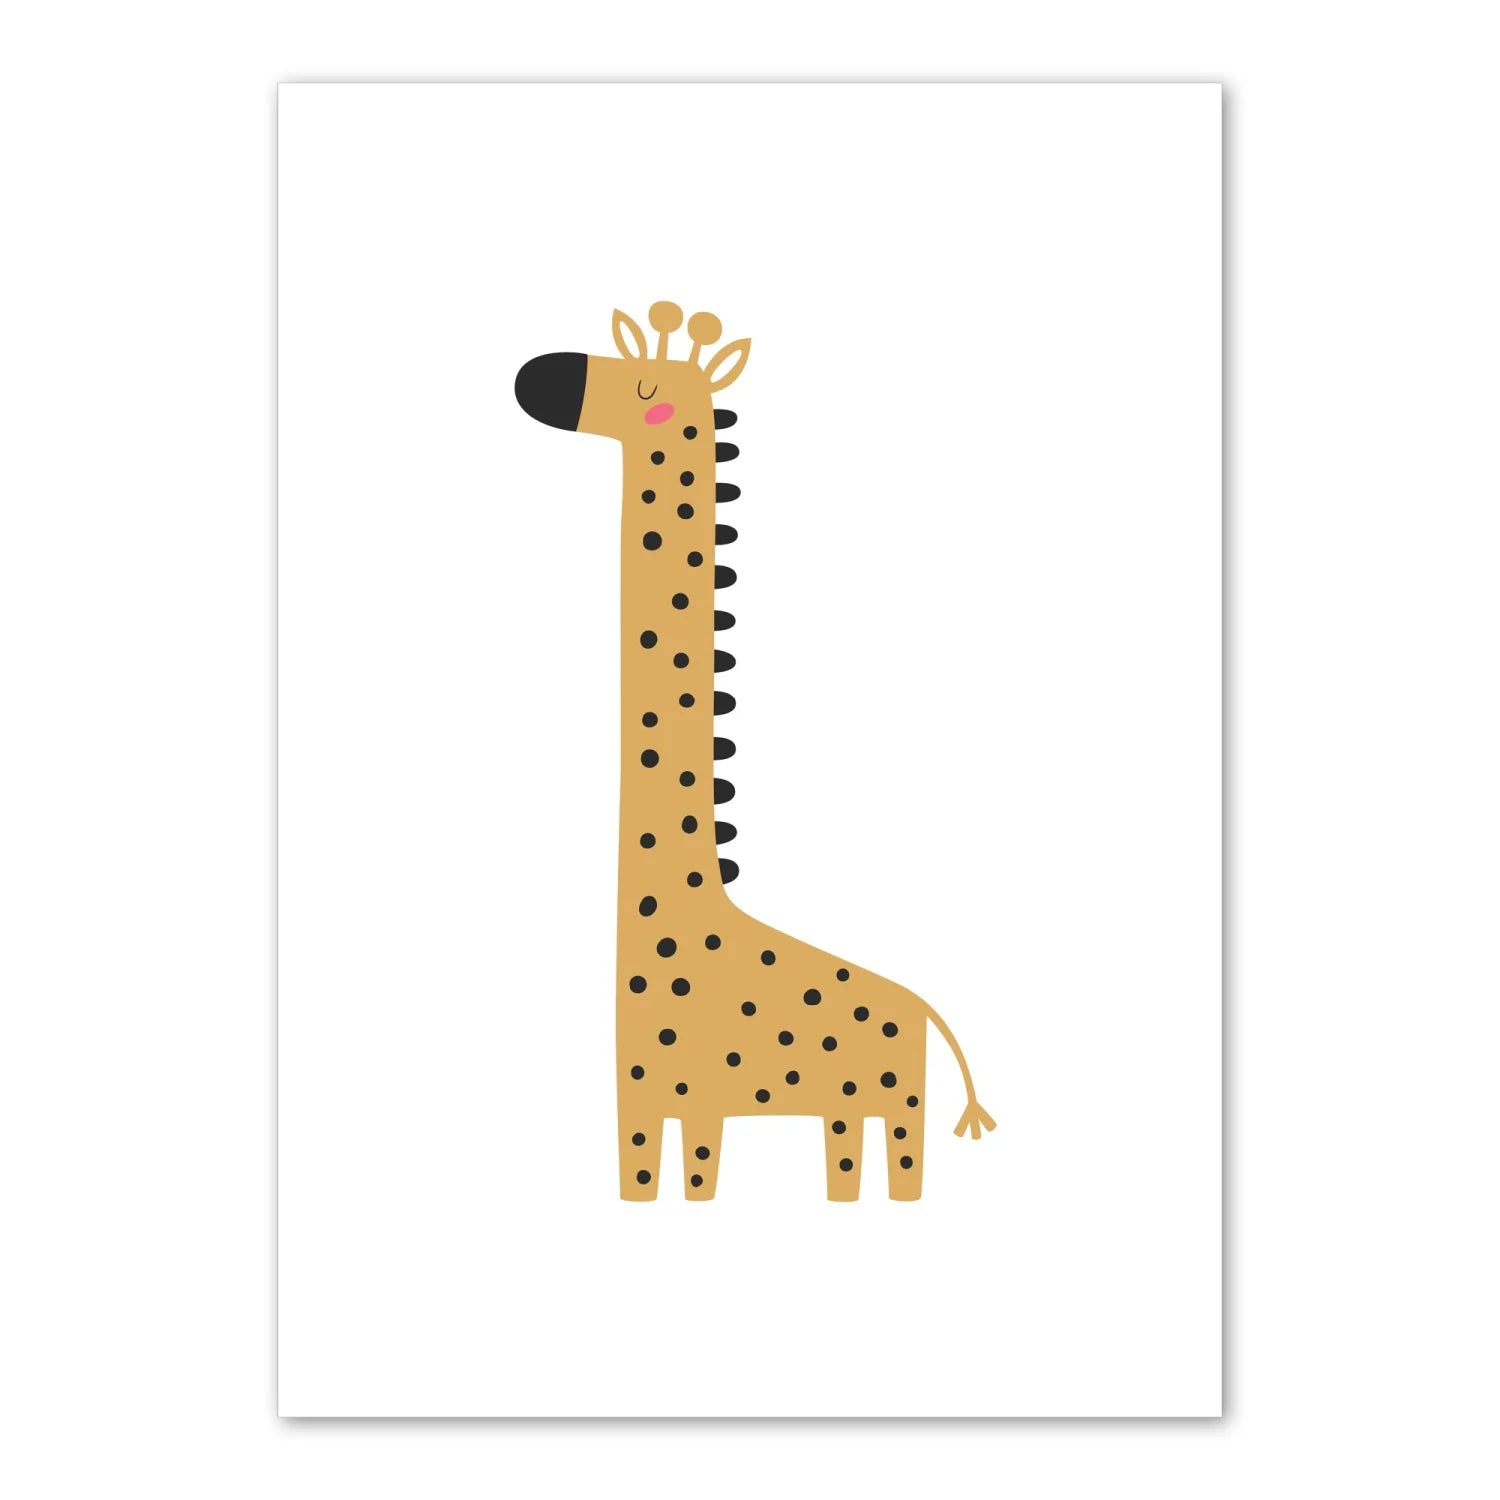 Giraffe and Zebra Print - Prints Animals